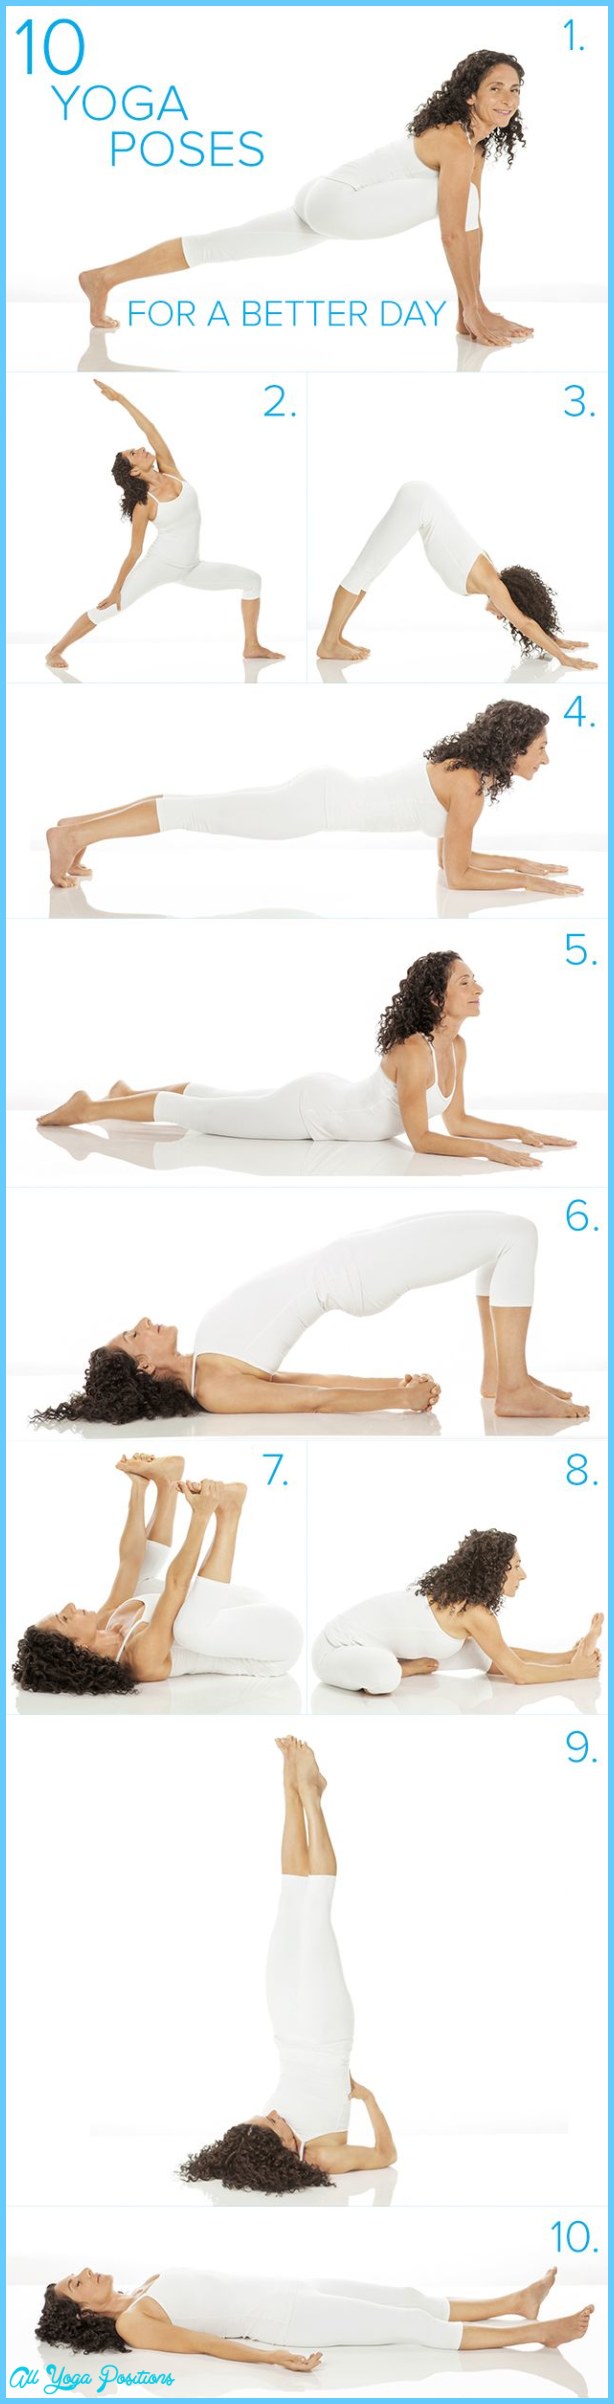 10 Basic Yoga Poses - AllYogaPositions.com